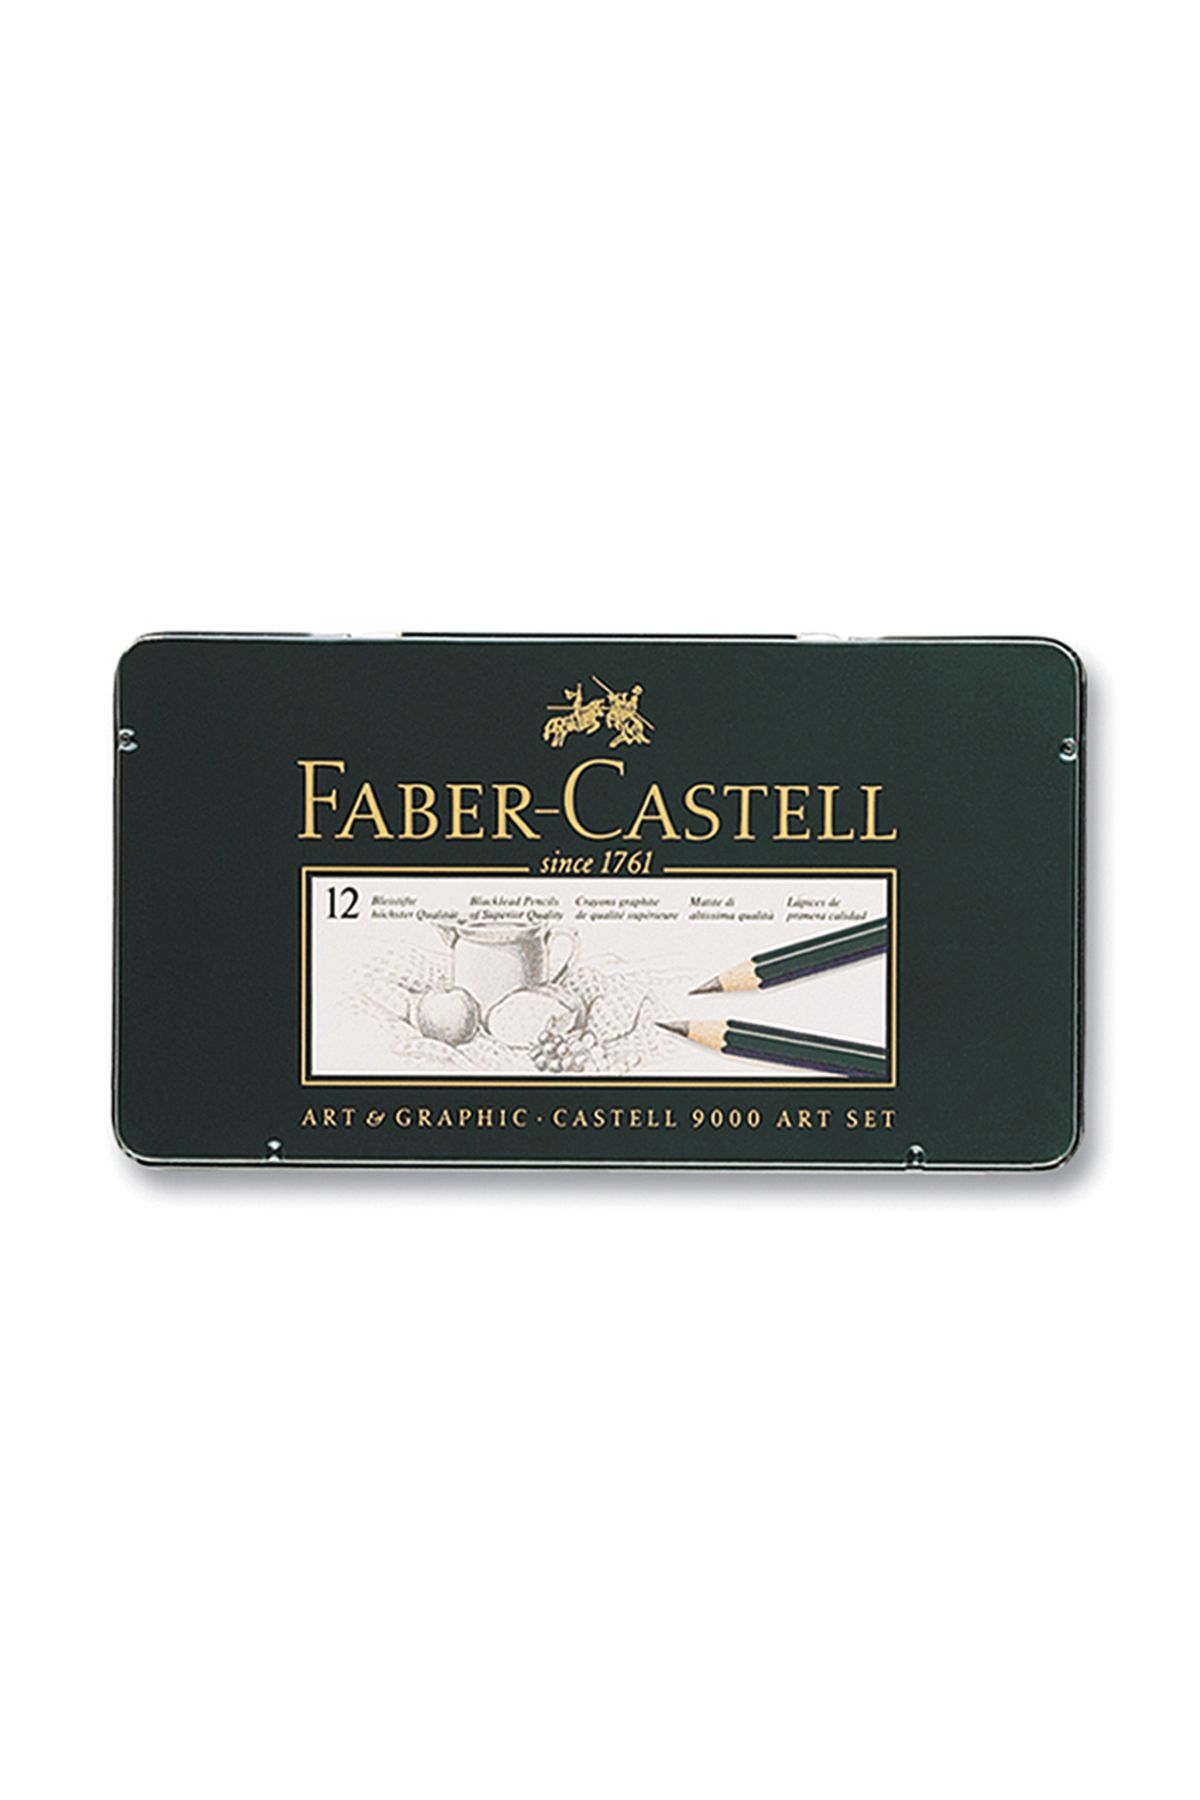 Faber Castell 9000 Art Dereceli Kurşun Kalem Seti 12’li 8B-2H